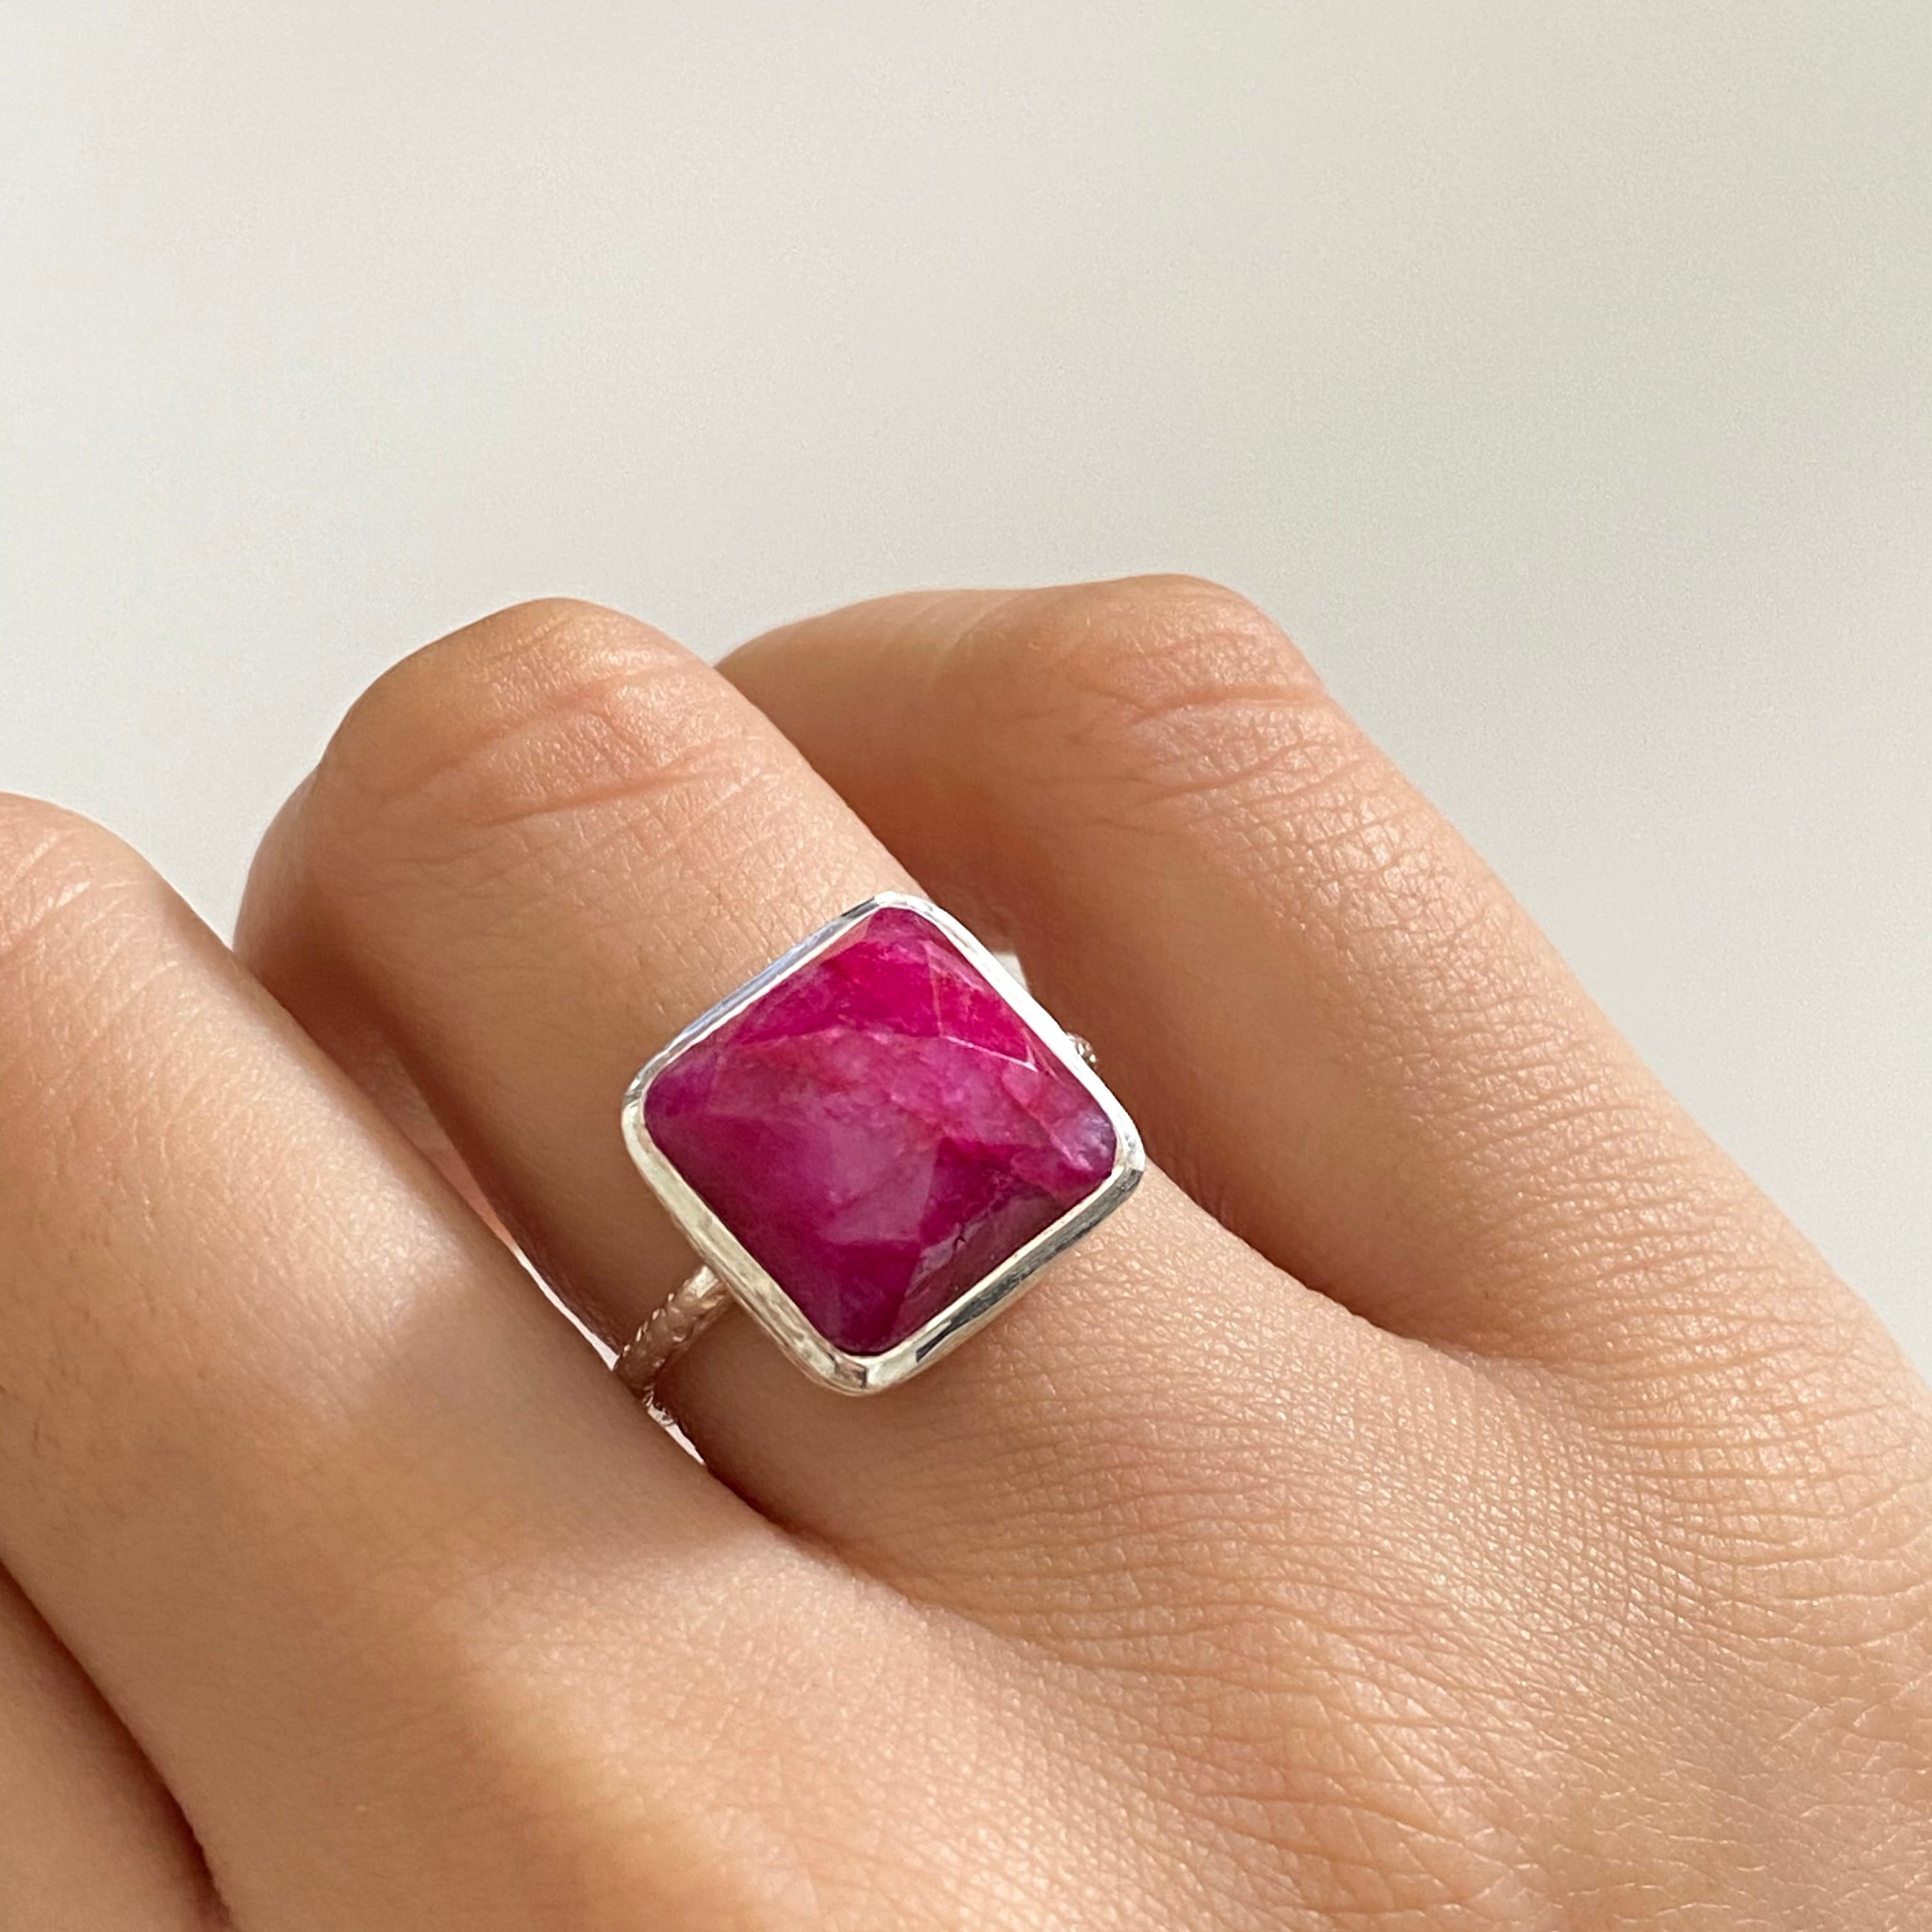 Sterling Silver Ring with Square Semiprecious Stone - Ruby Quartz